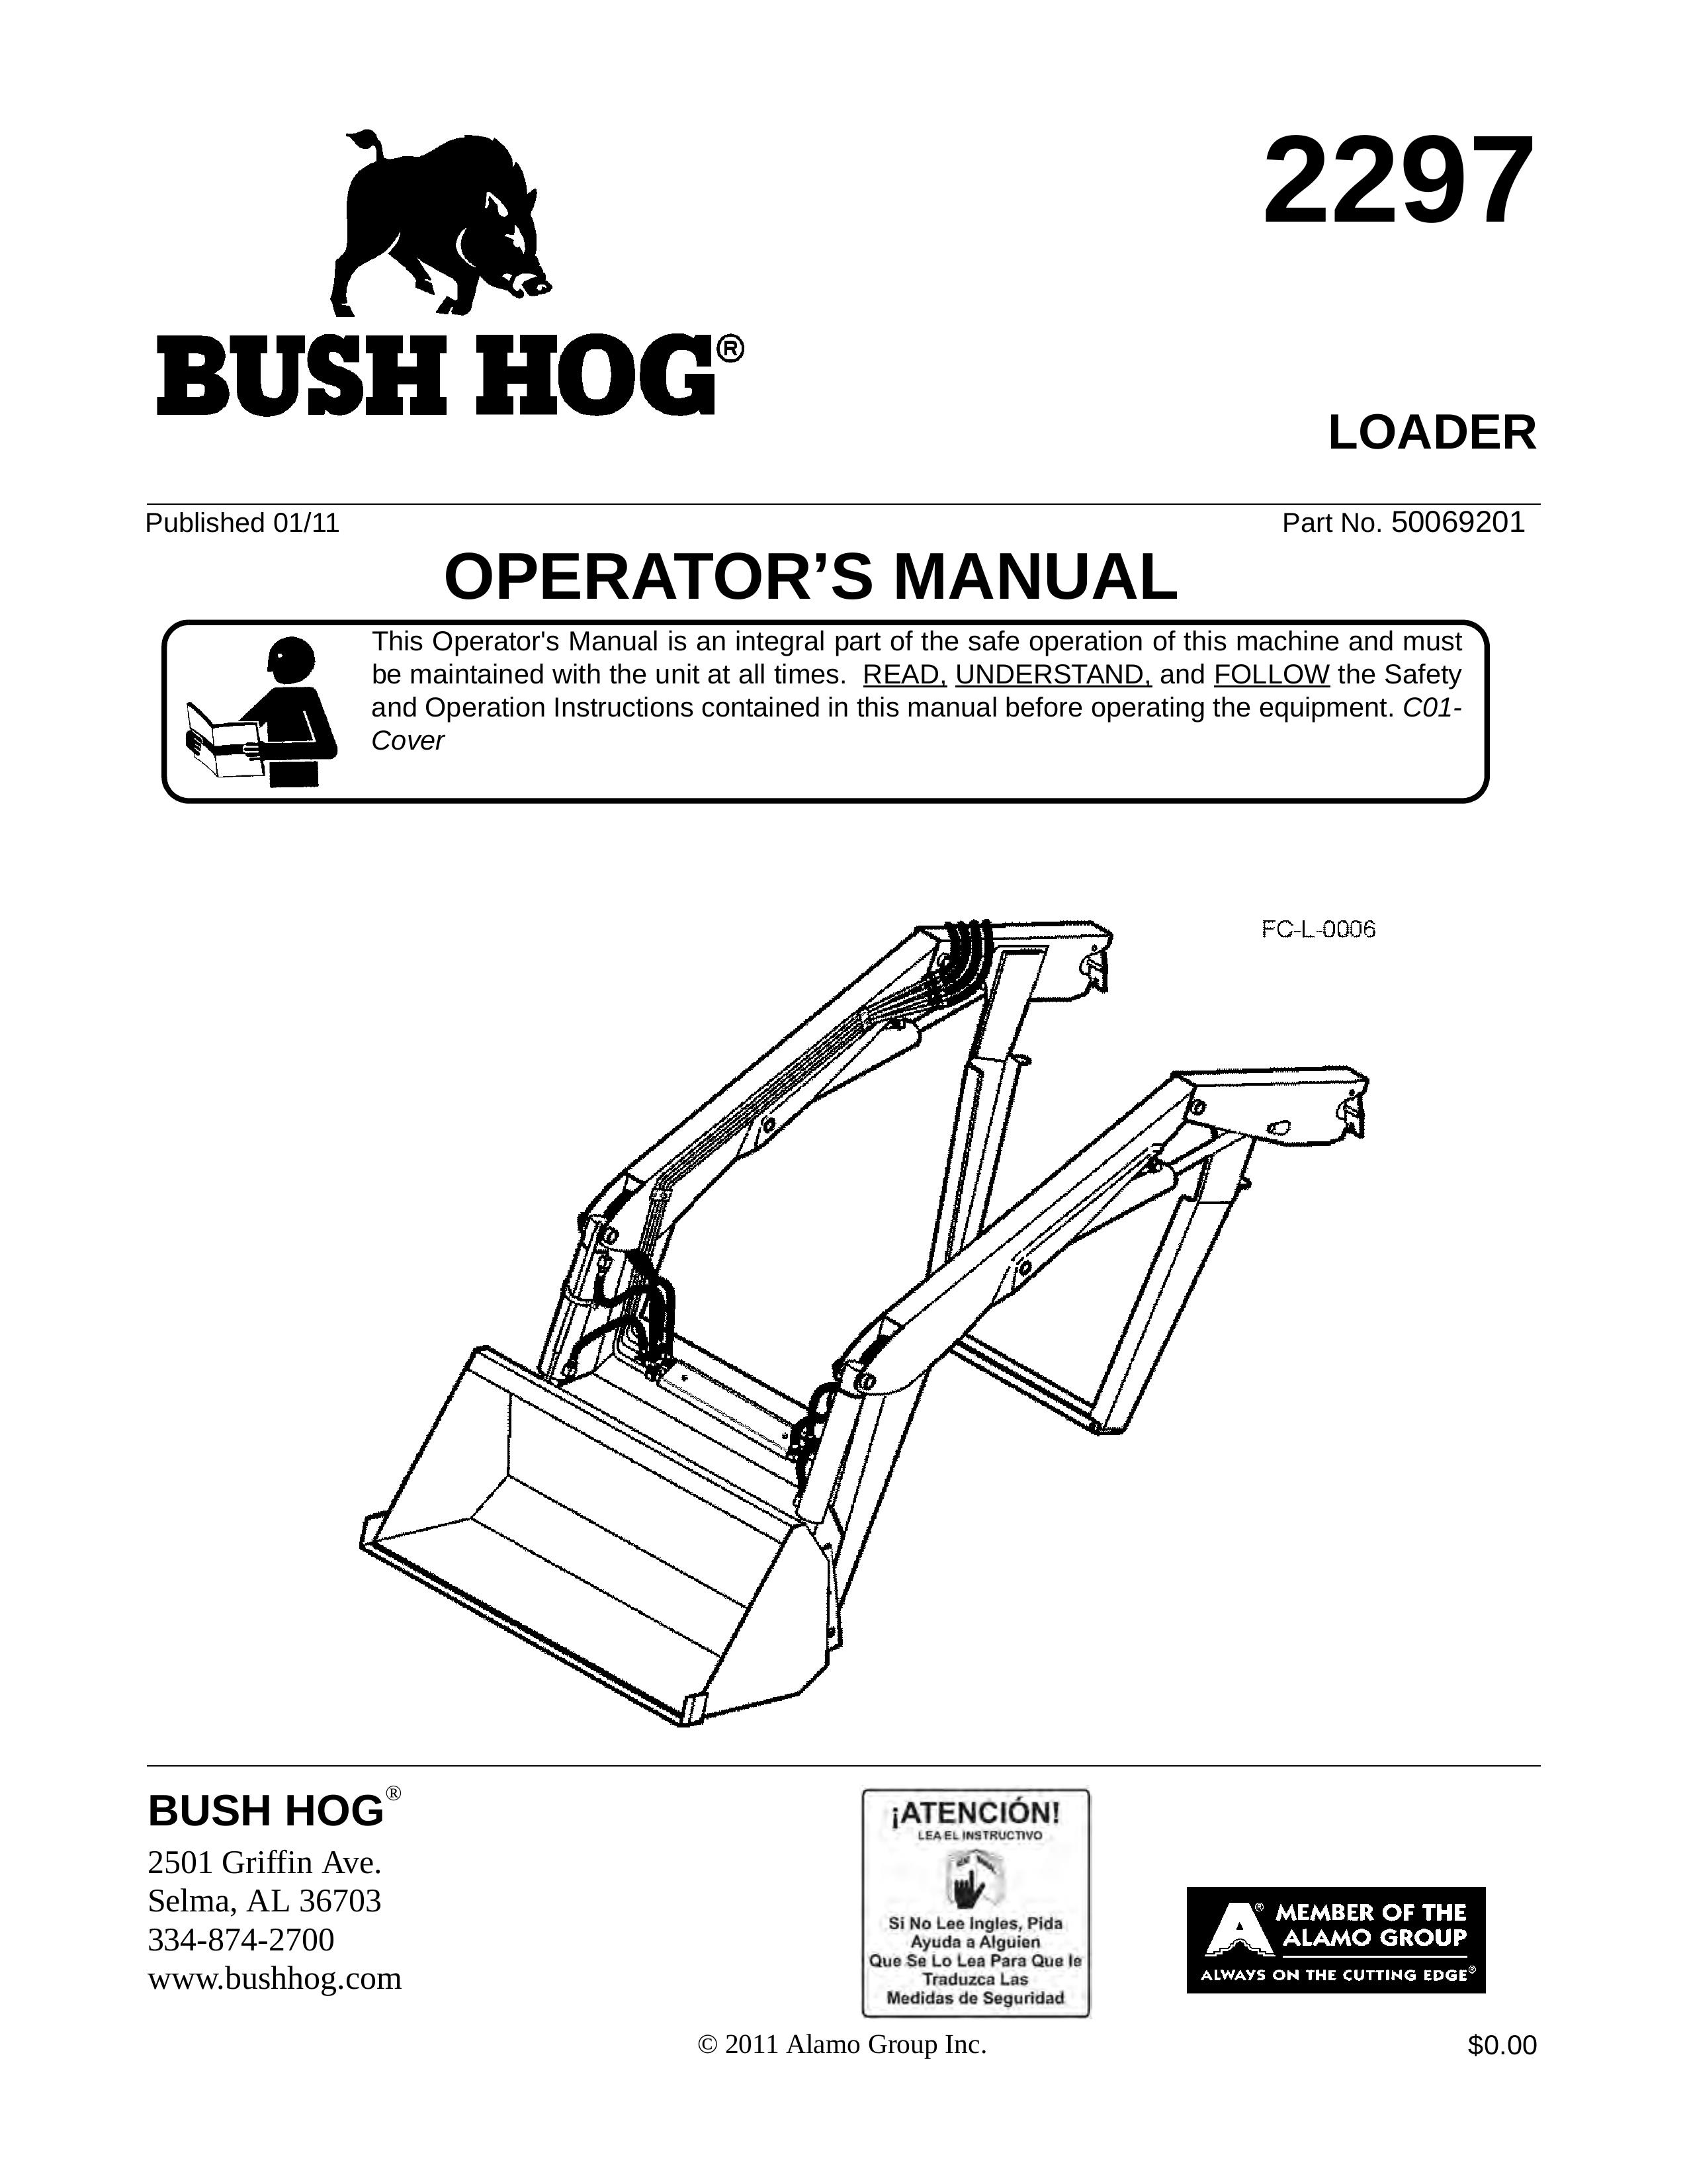 Bush Hog 2297 Compact Loader User Manual